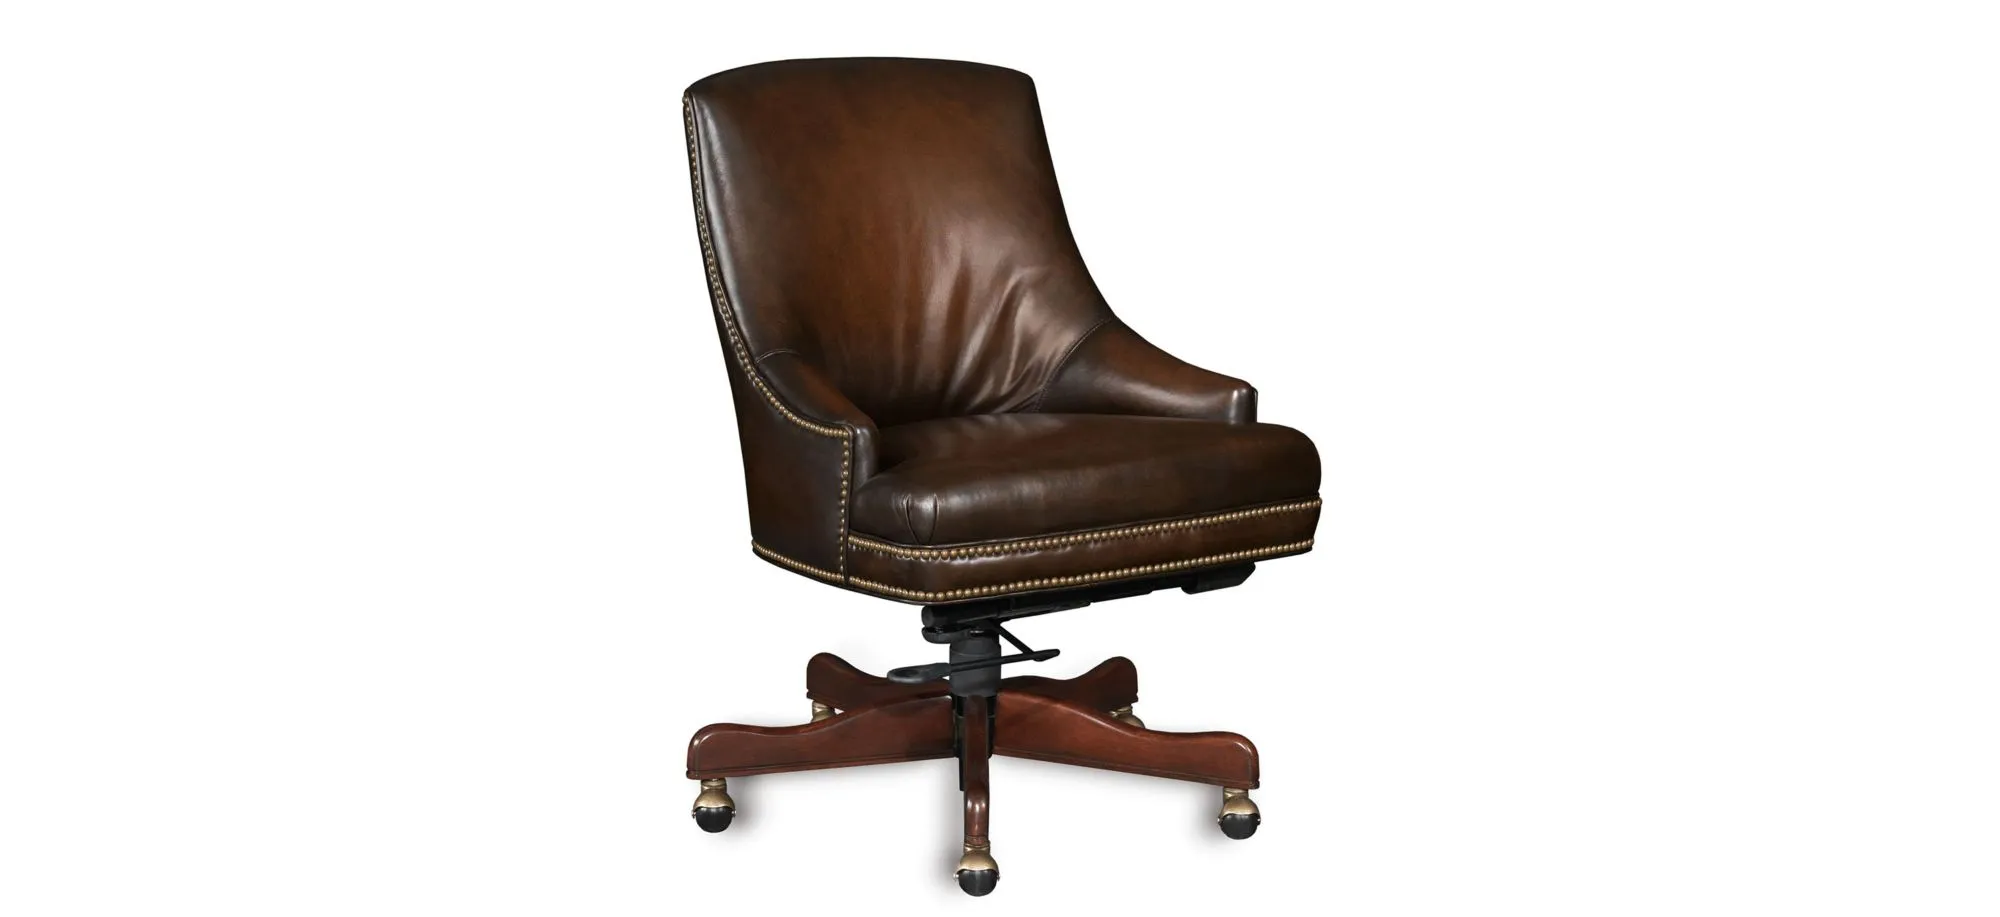 Heidi Executive Swivel Tilt Chair in Brown by Hooker Furniture